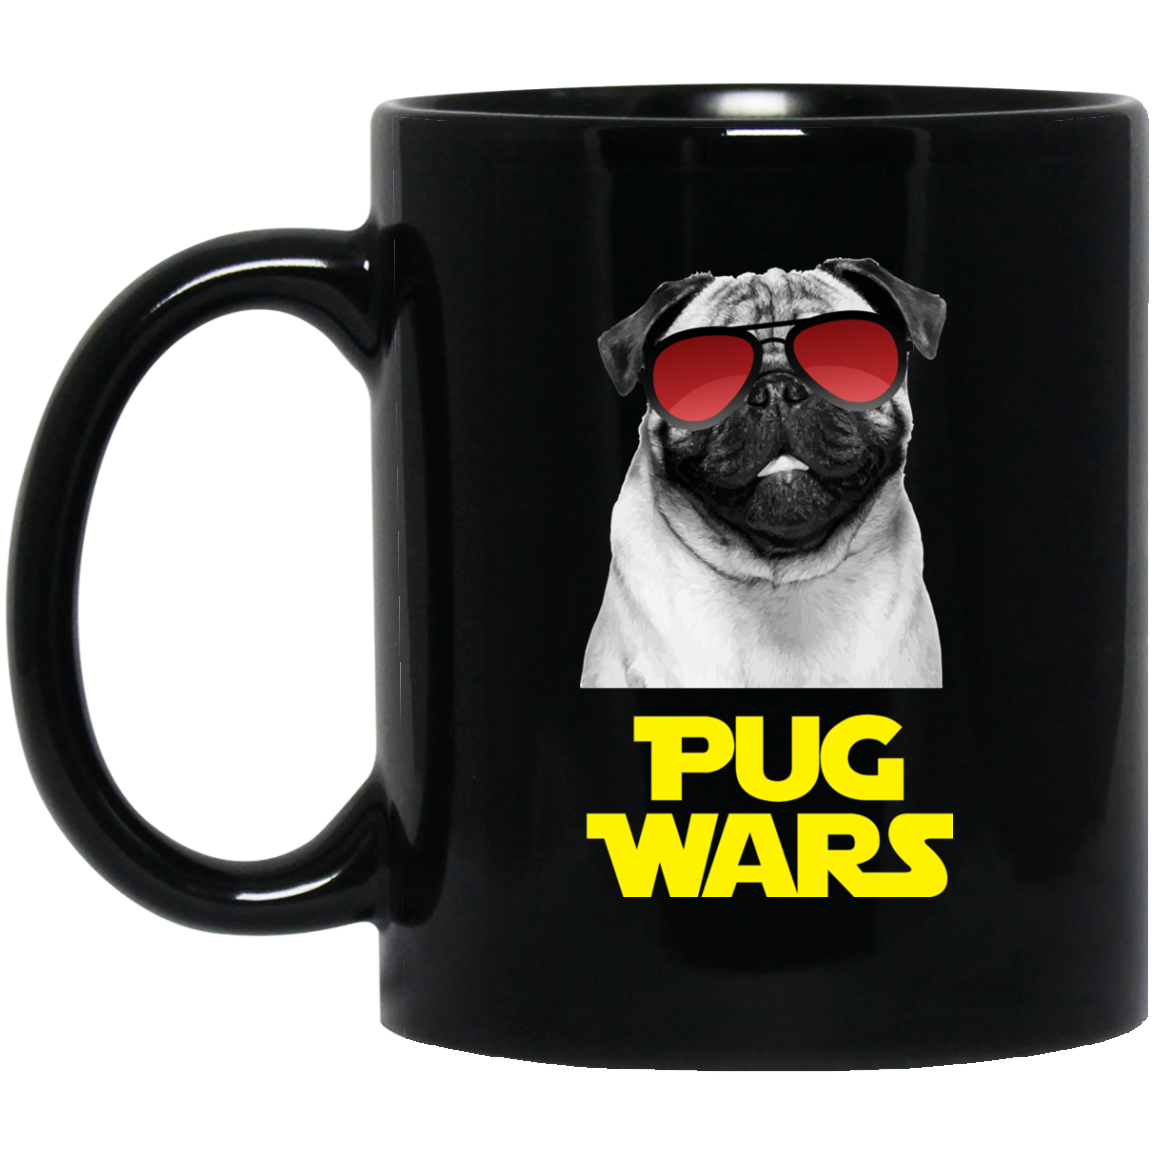 Pug Wars 11 oz. Black Mug